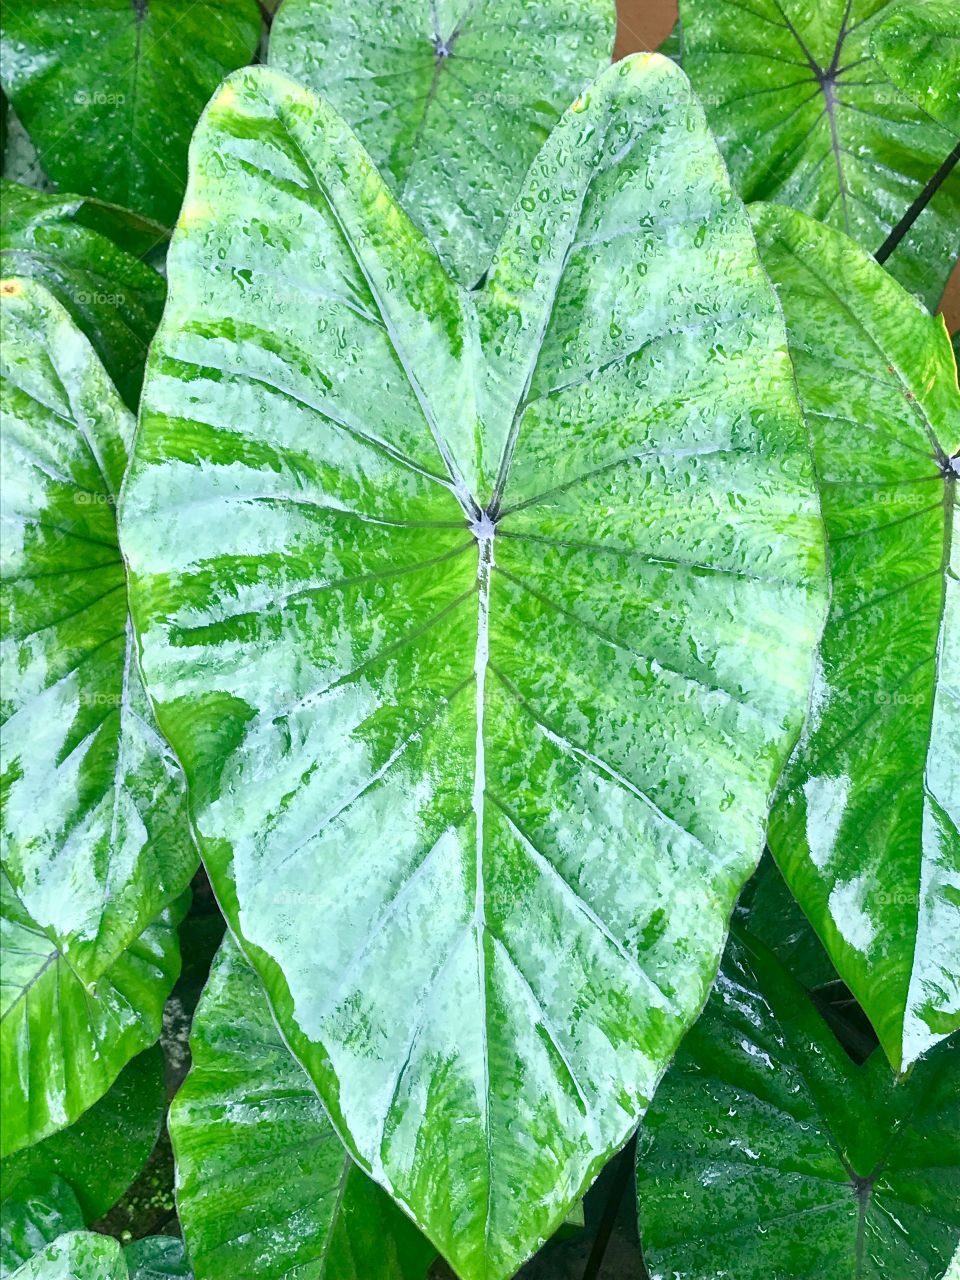 Kalo (Taro) leaves